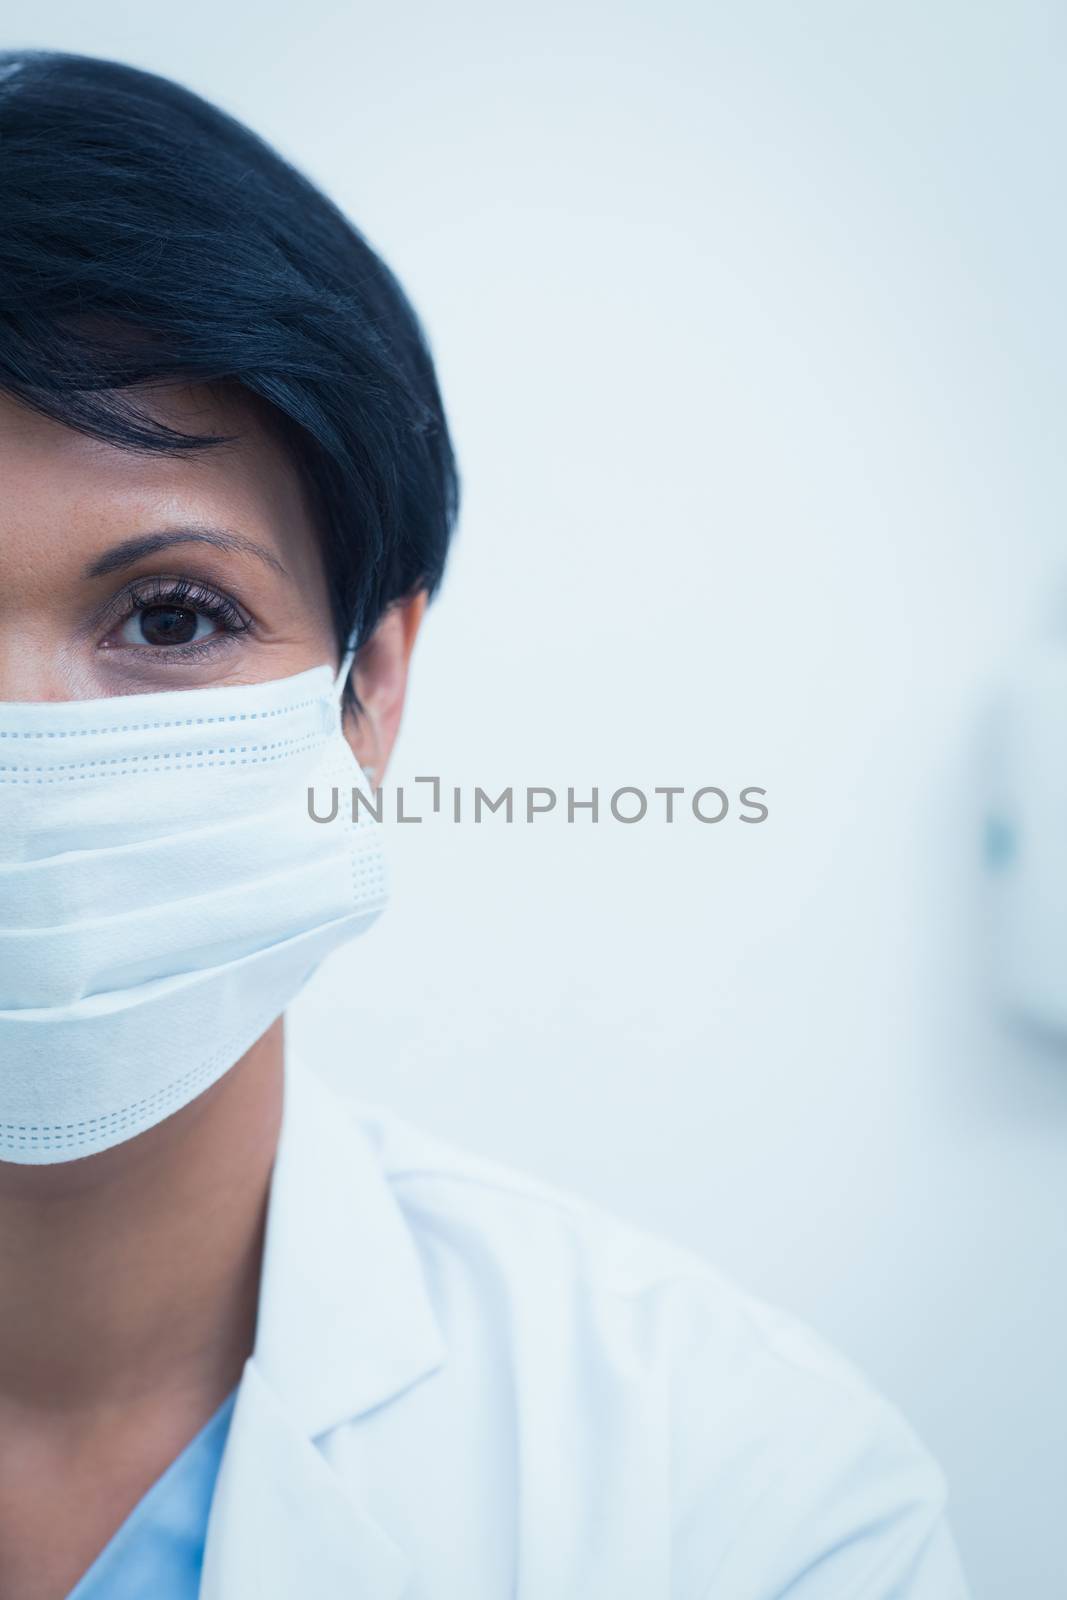 Female dentist wearing surgical mask by Wavebreakmedia